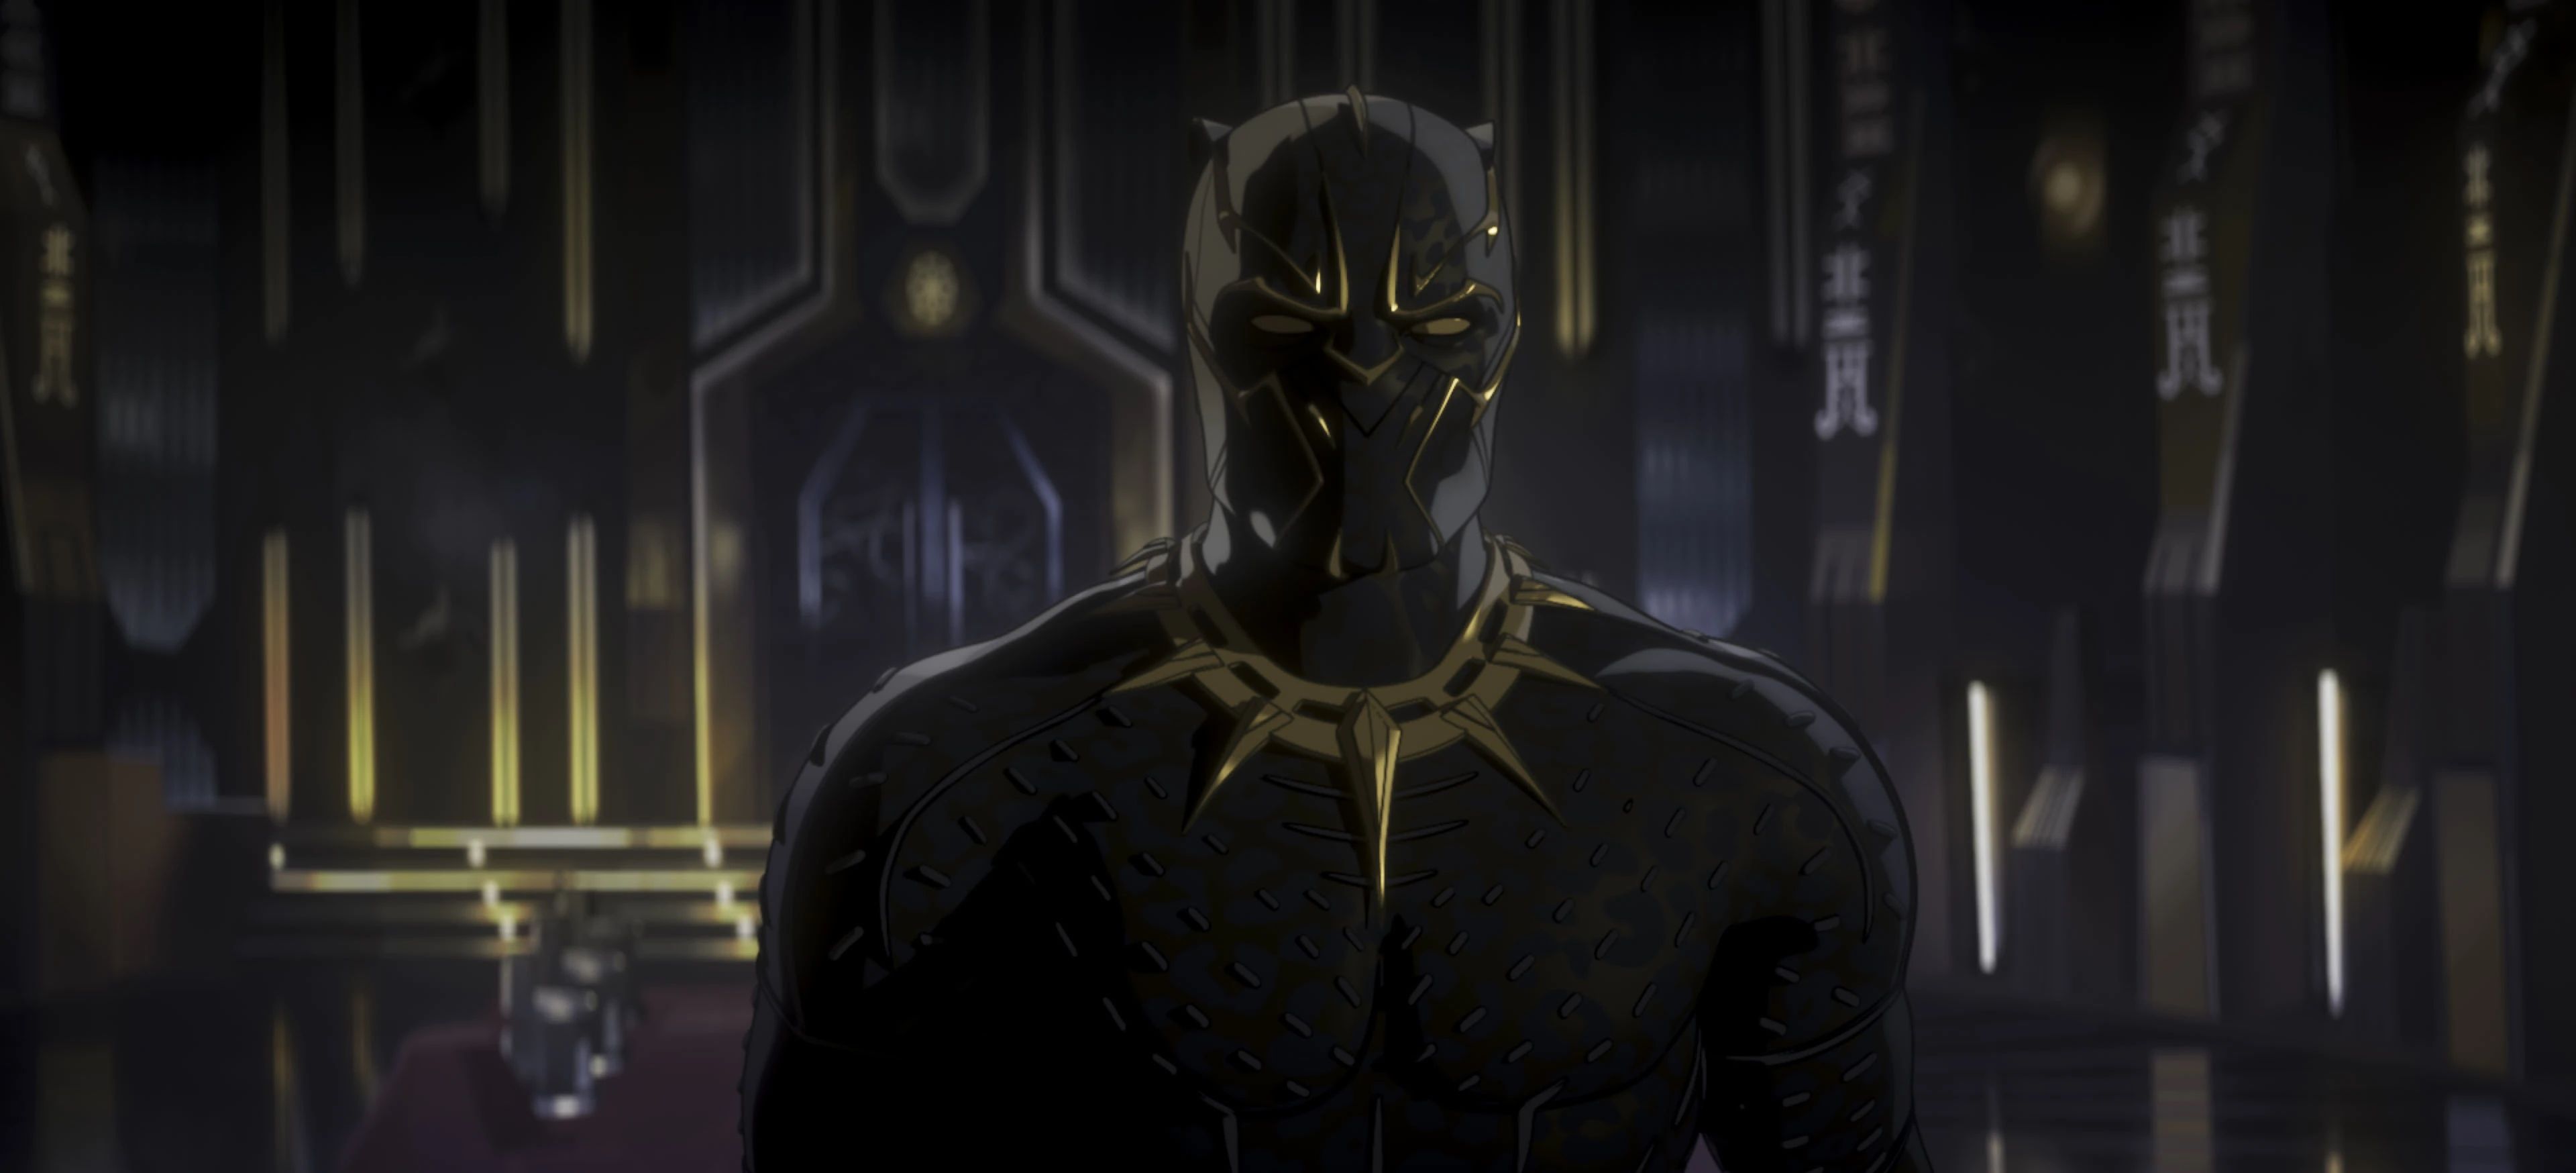 What If... Killmonger Rescued Tony Stark Wallpapers